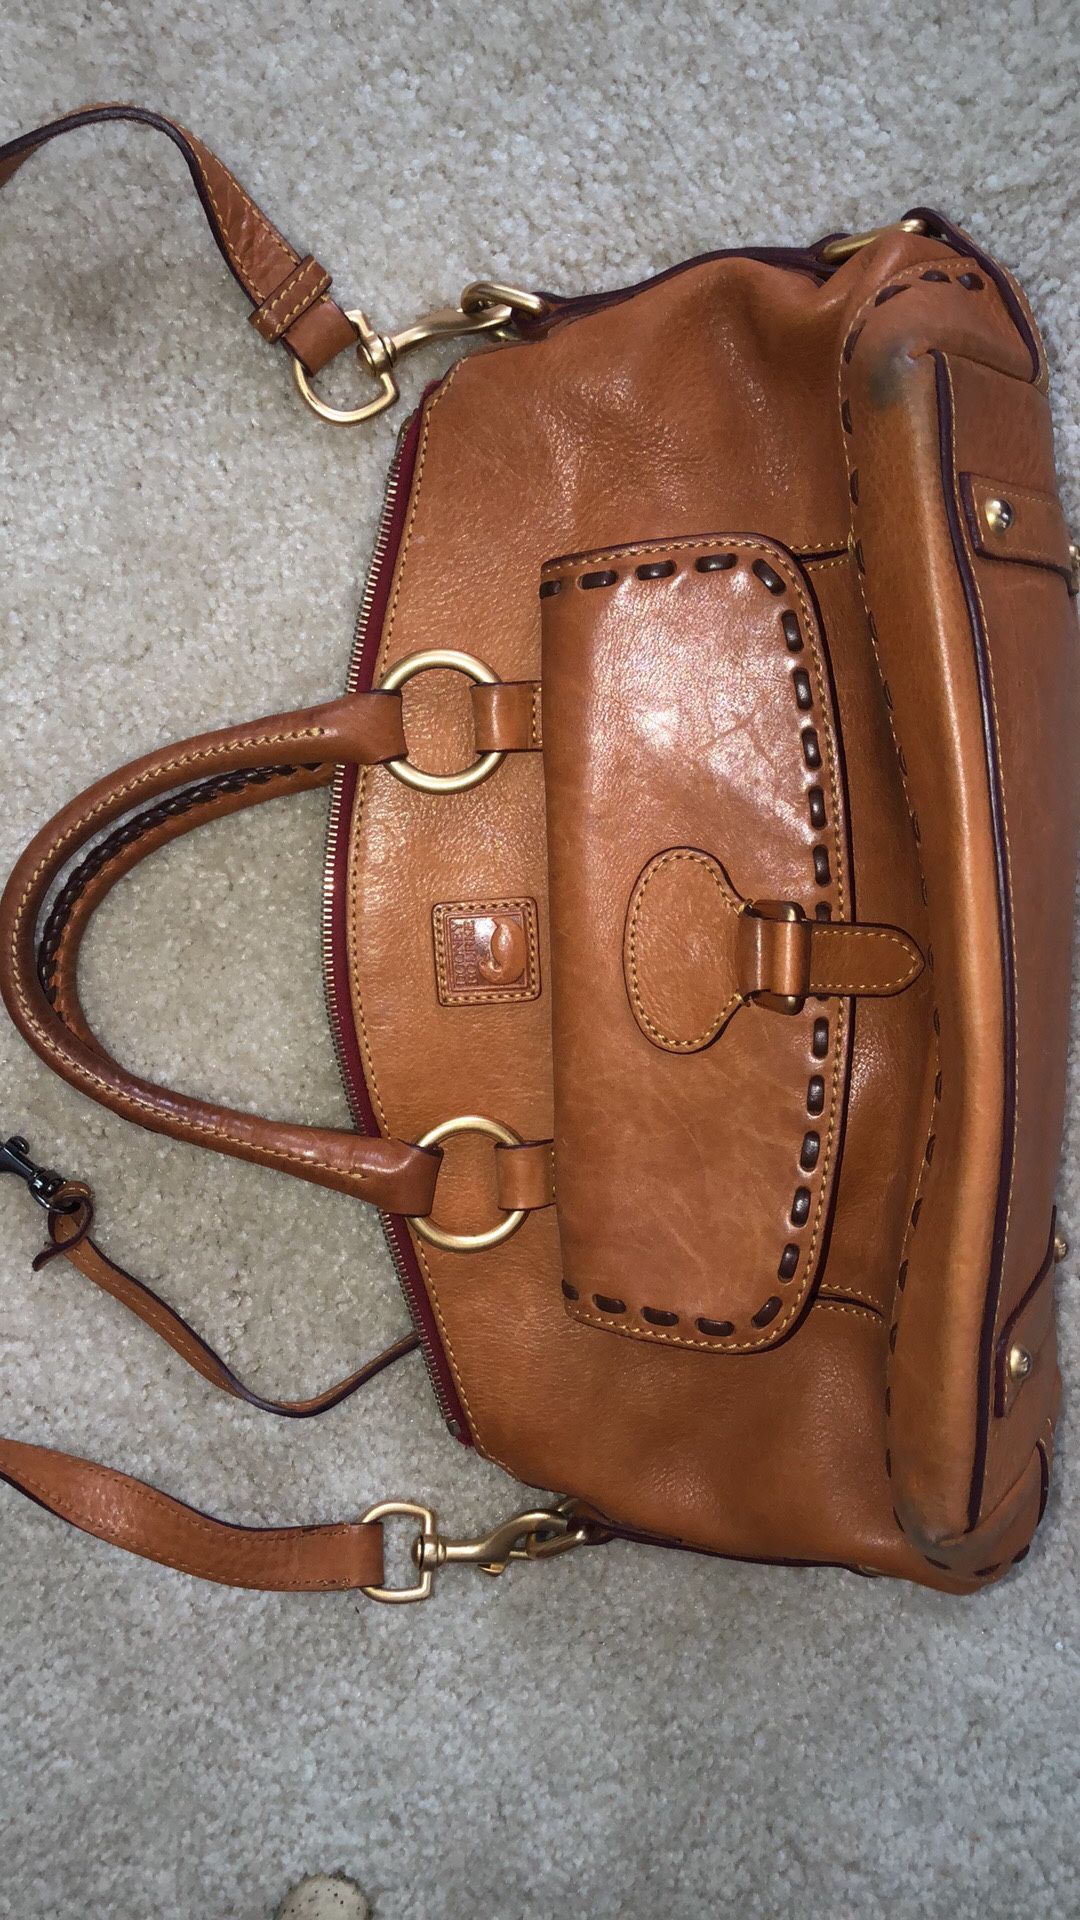 Dooney Bourke Leather Carmel Colored Handbag 